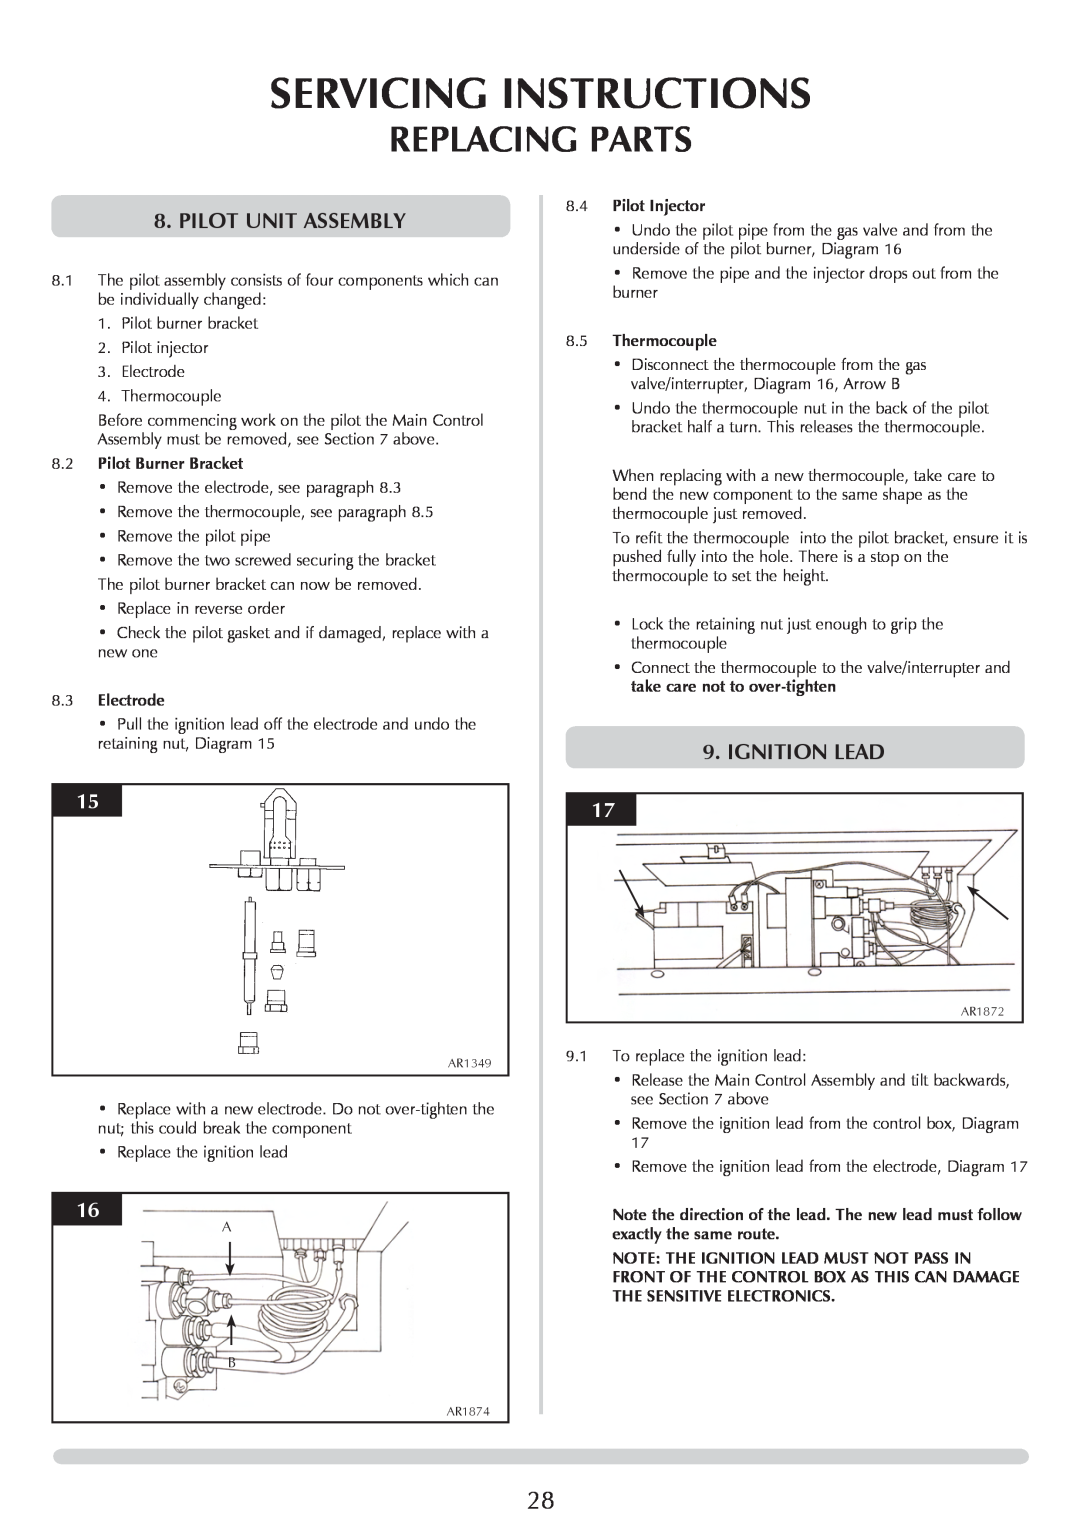 Stovax PR0919 manual Pilot Unit Assembly, Ignition Lead, Servicing Instructions, Replacing Parts, 8.2Pilot Burner Bracket 